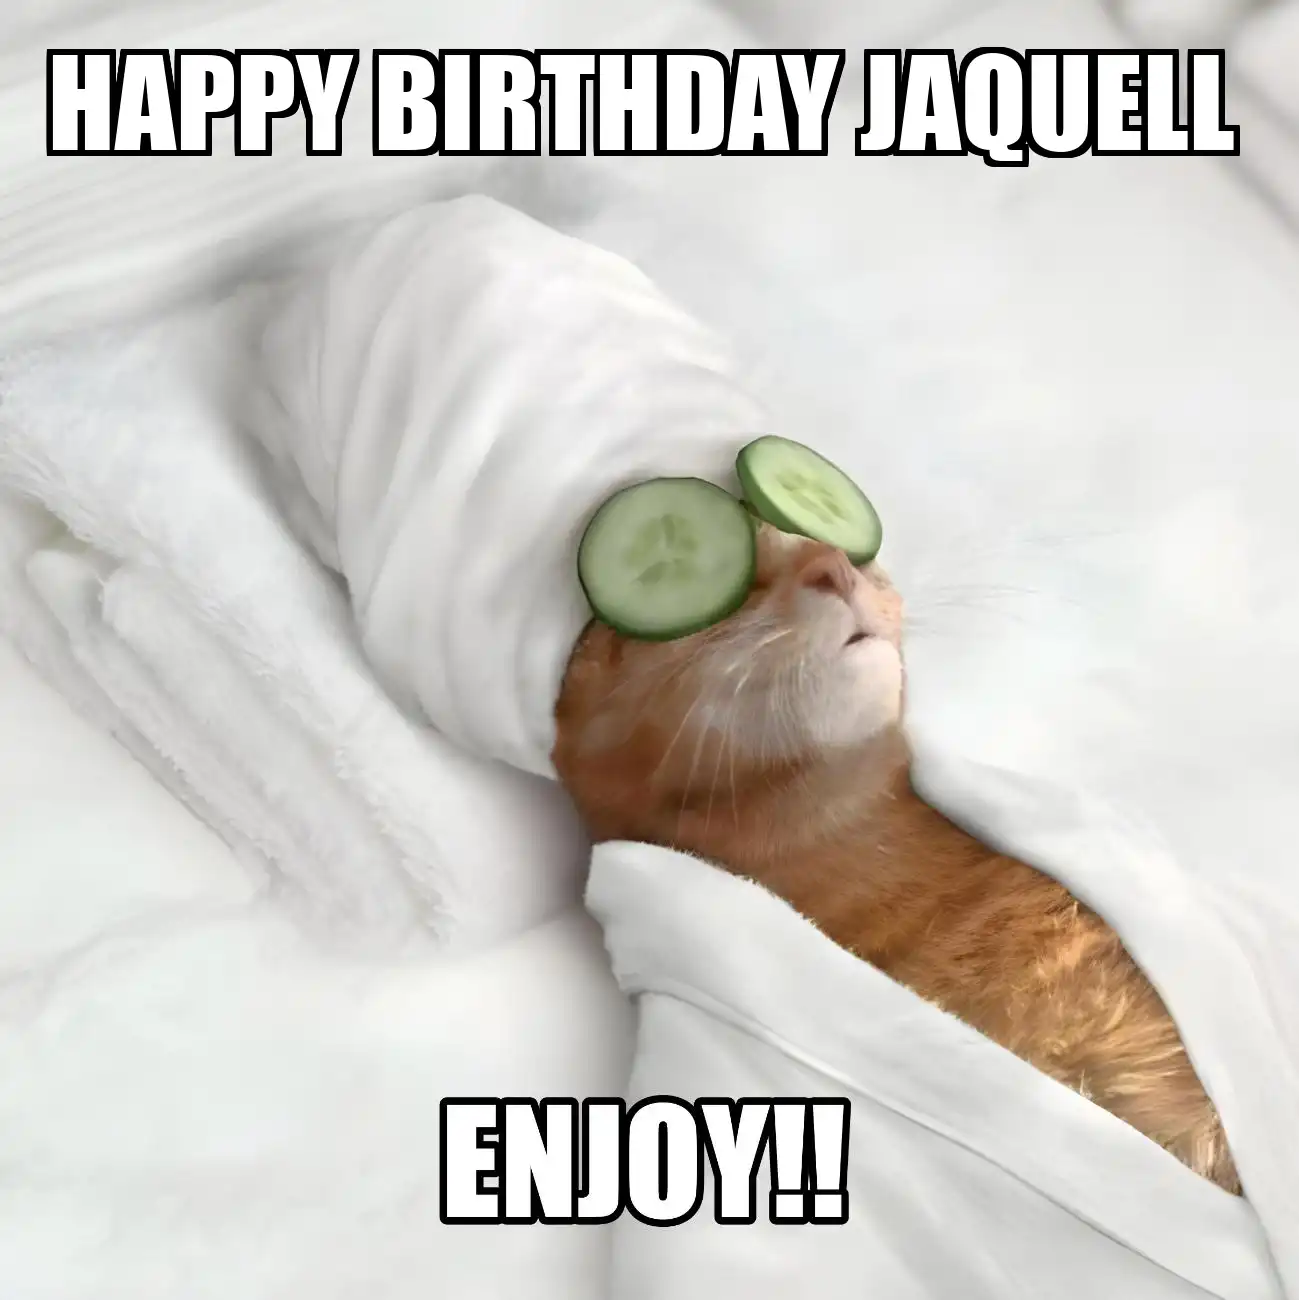 Happy Birthday Jaquell Enjoy Cat Meme